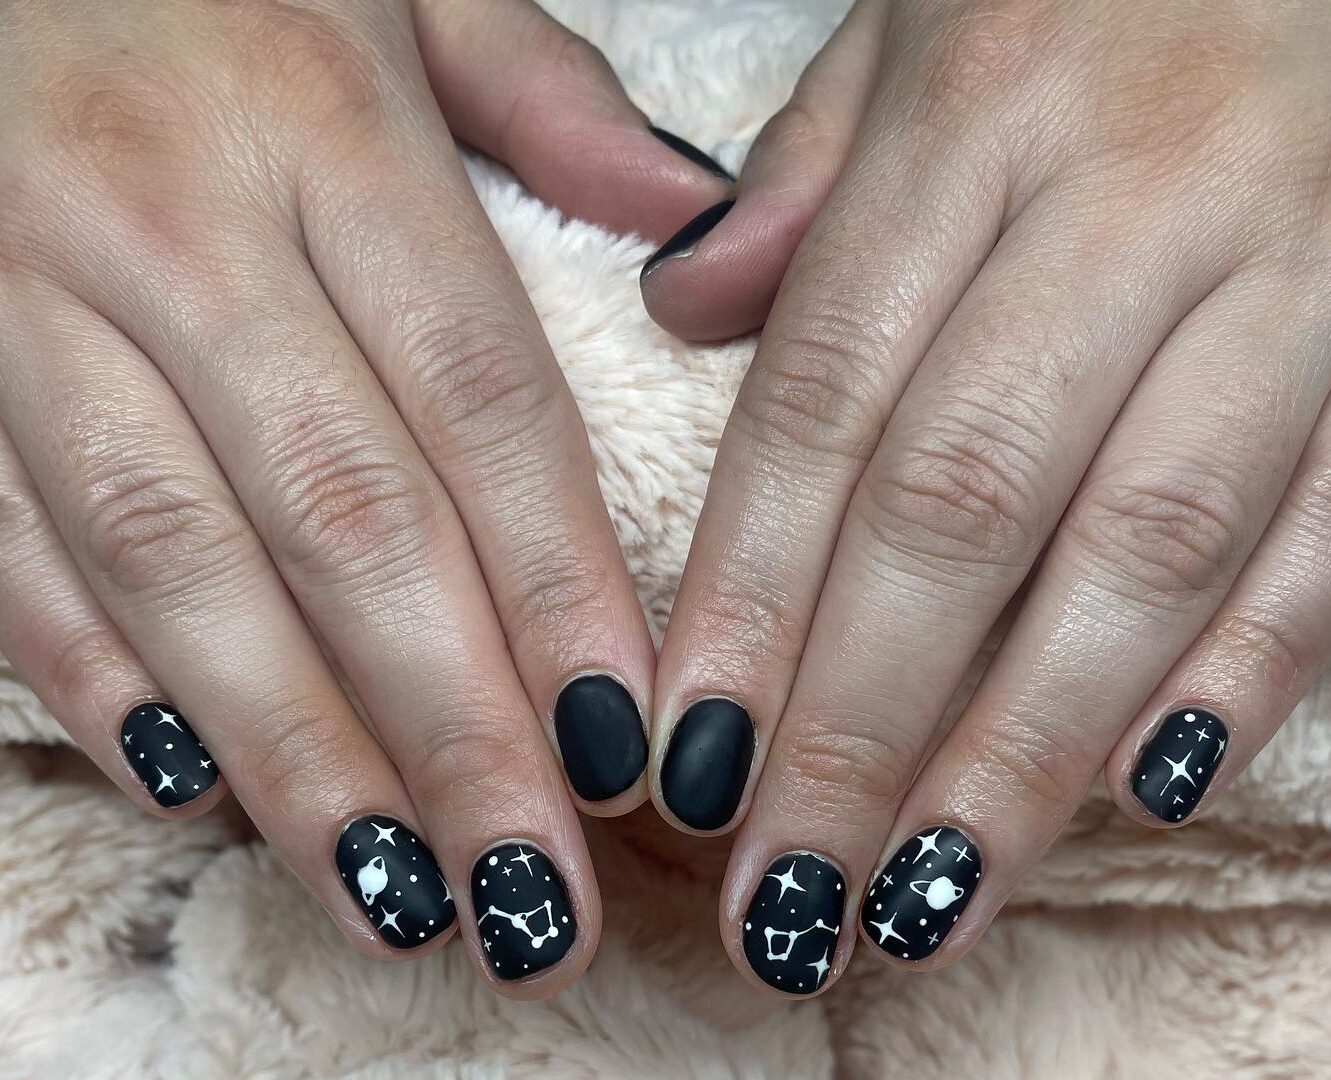 Black nail color in matte finish with galaxy nail arts on short nails